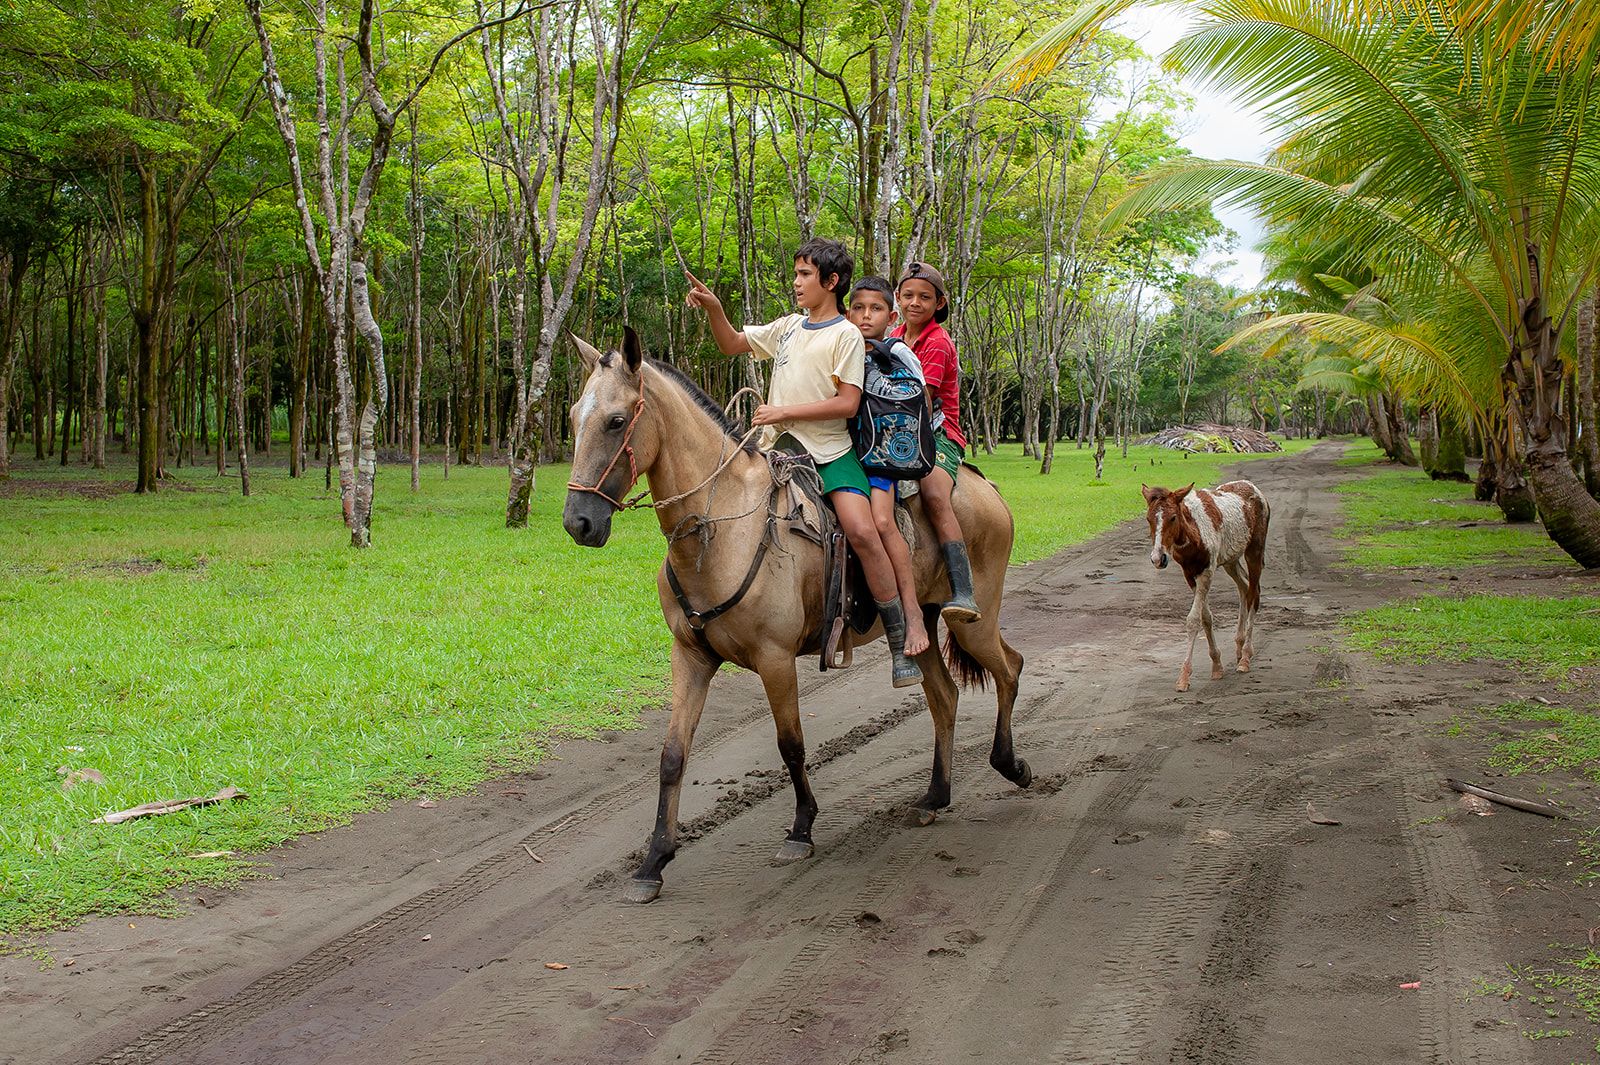 Kids on a horse at Playa Linda Costa Rica